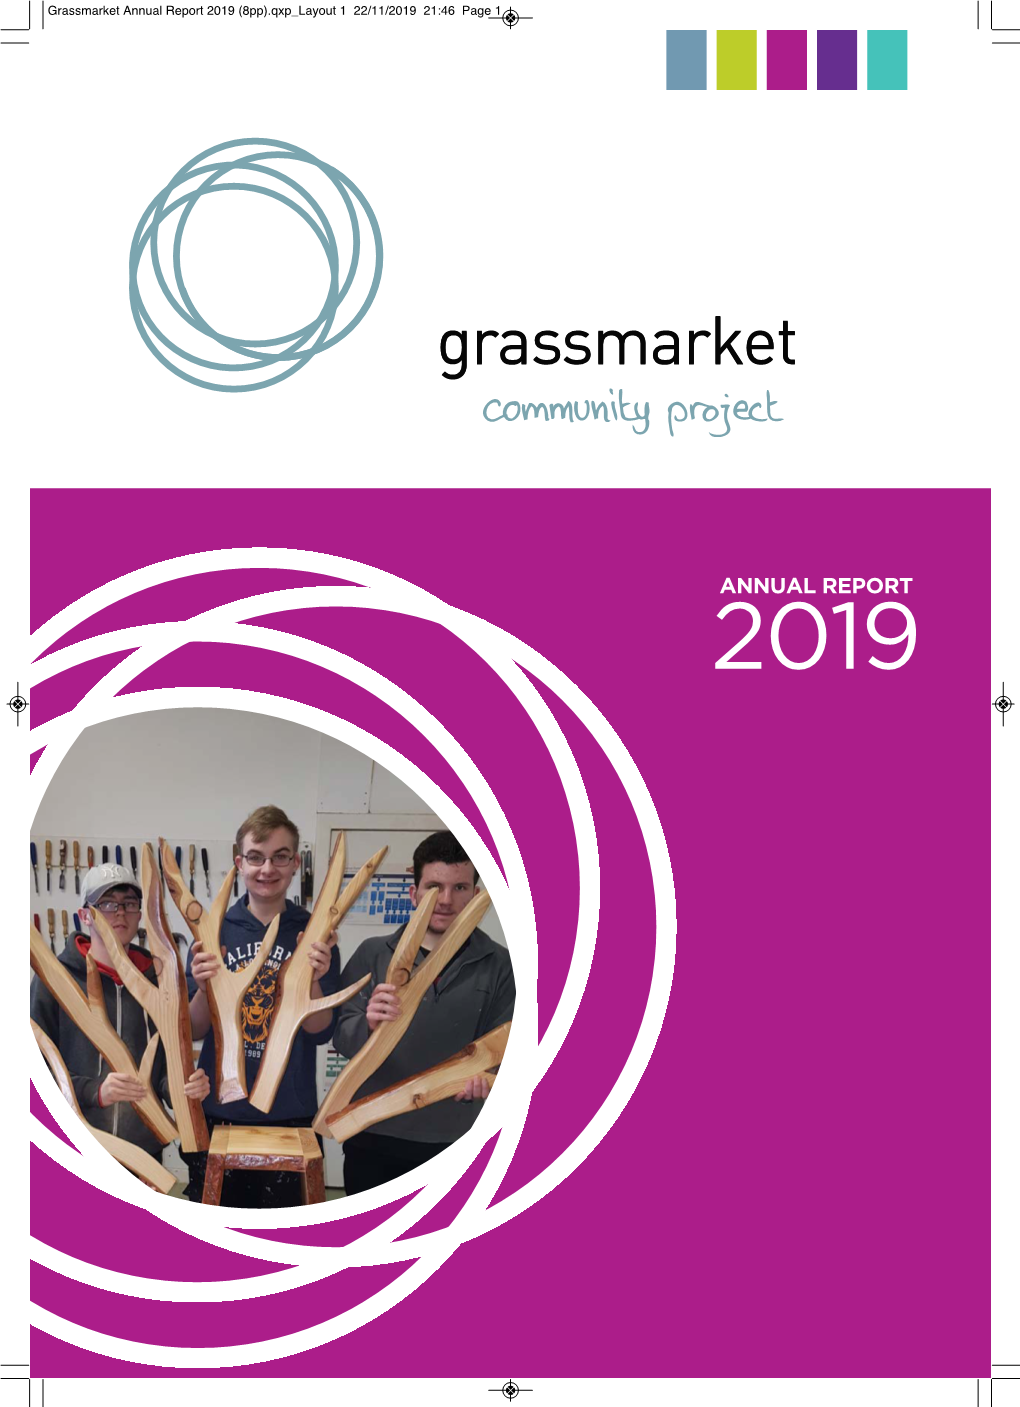 Grassmarket Community Project Annual Report 2019